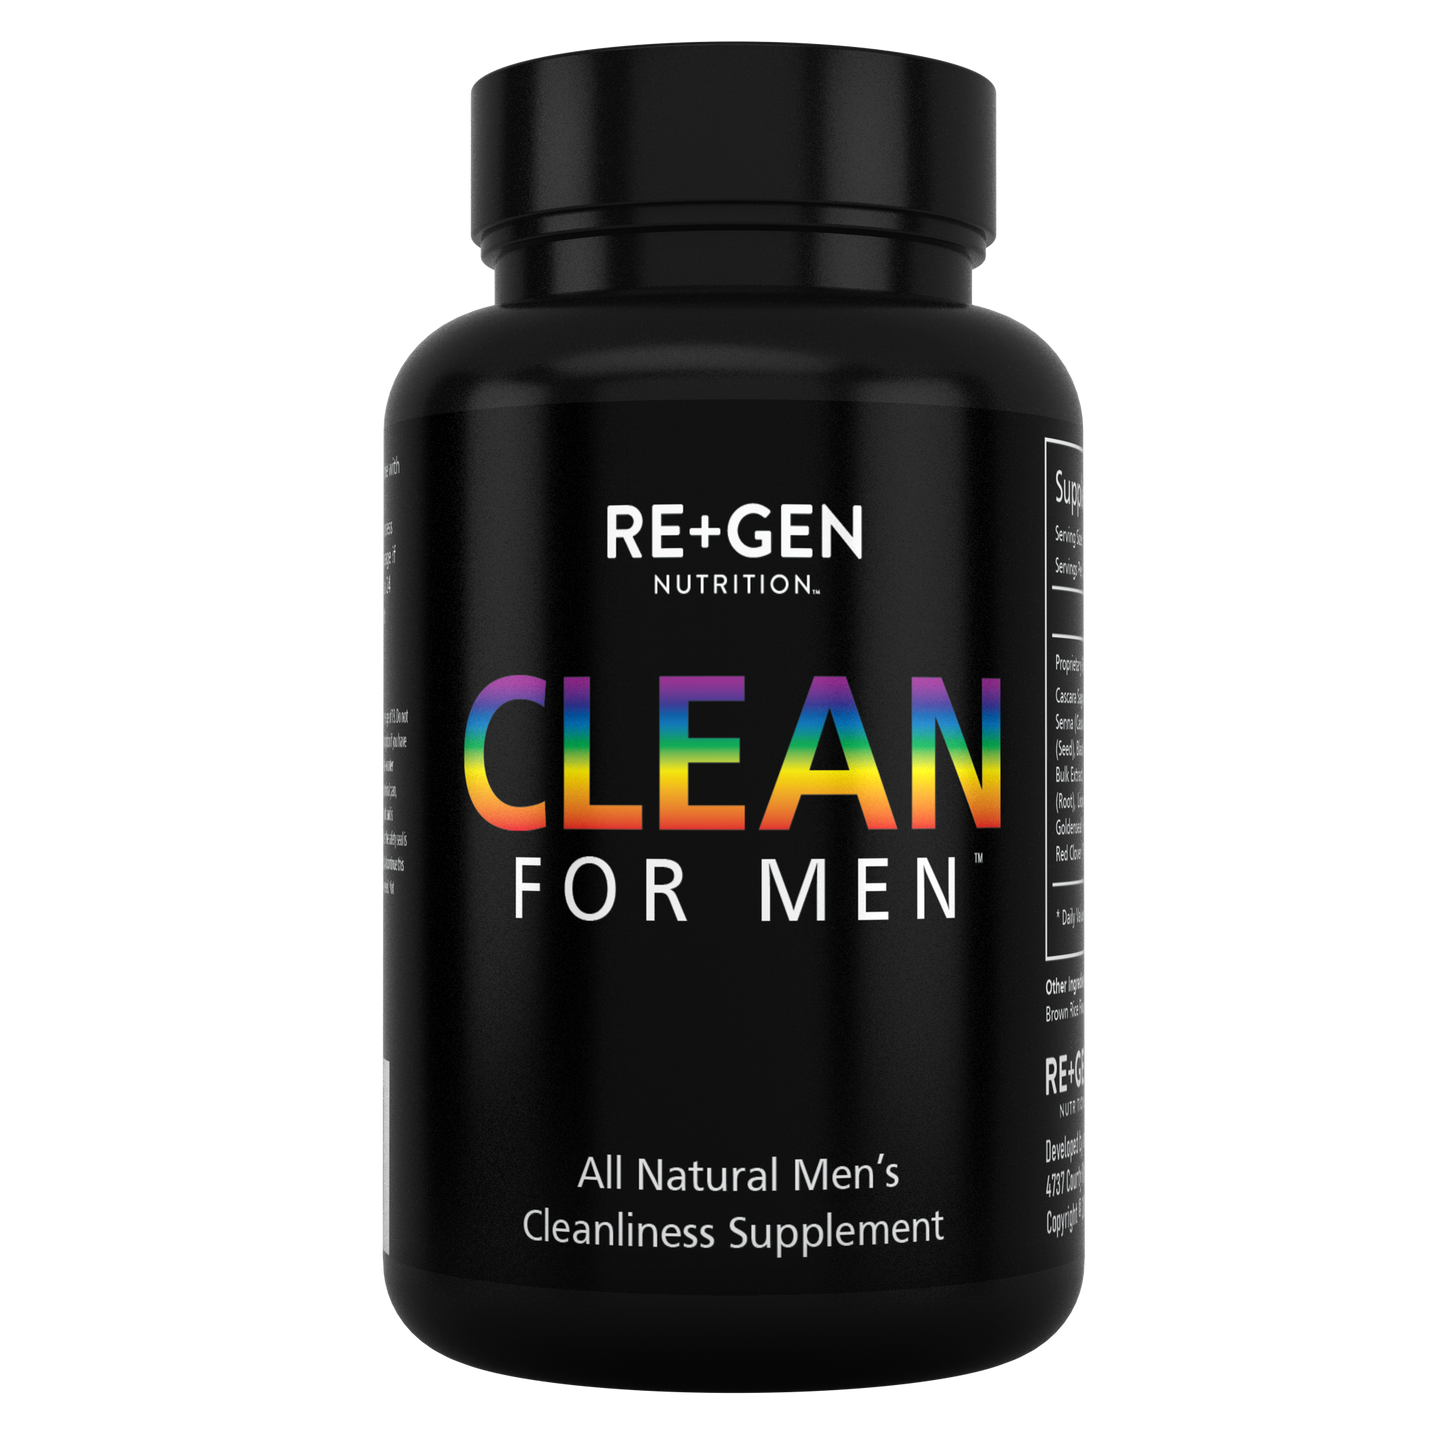 CLEAN FOR MEN